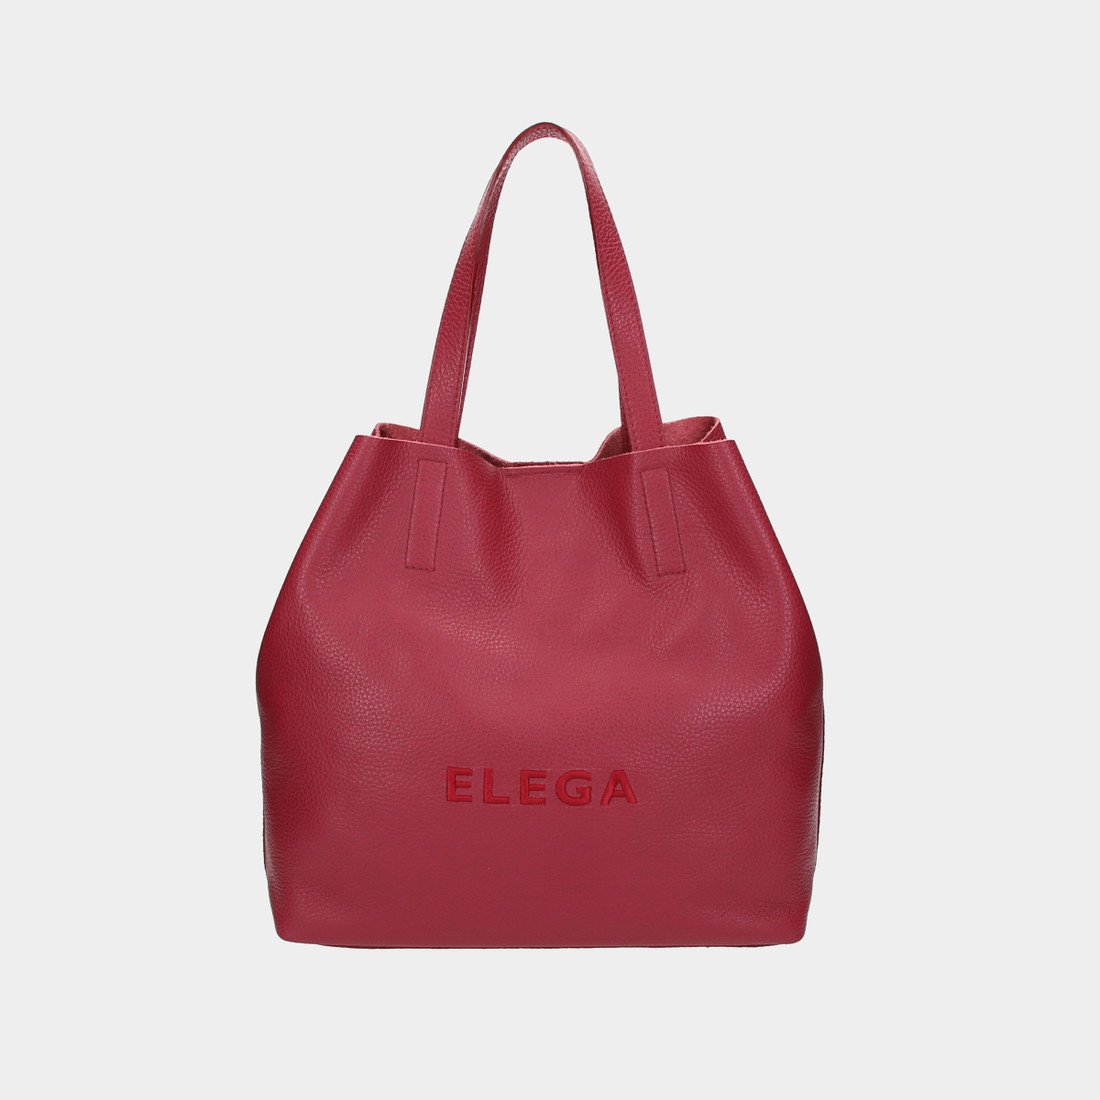 ELEGA Malá kabelka Fancy červená/stříbro